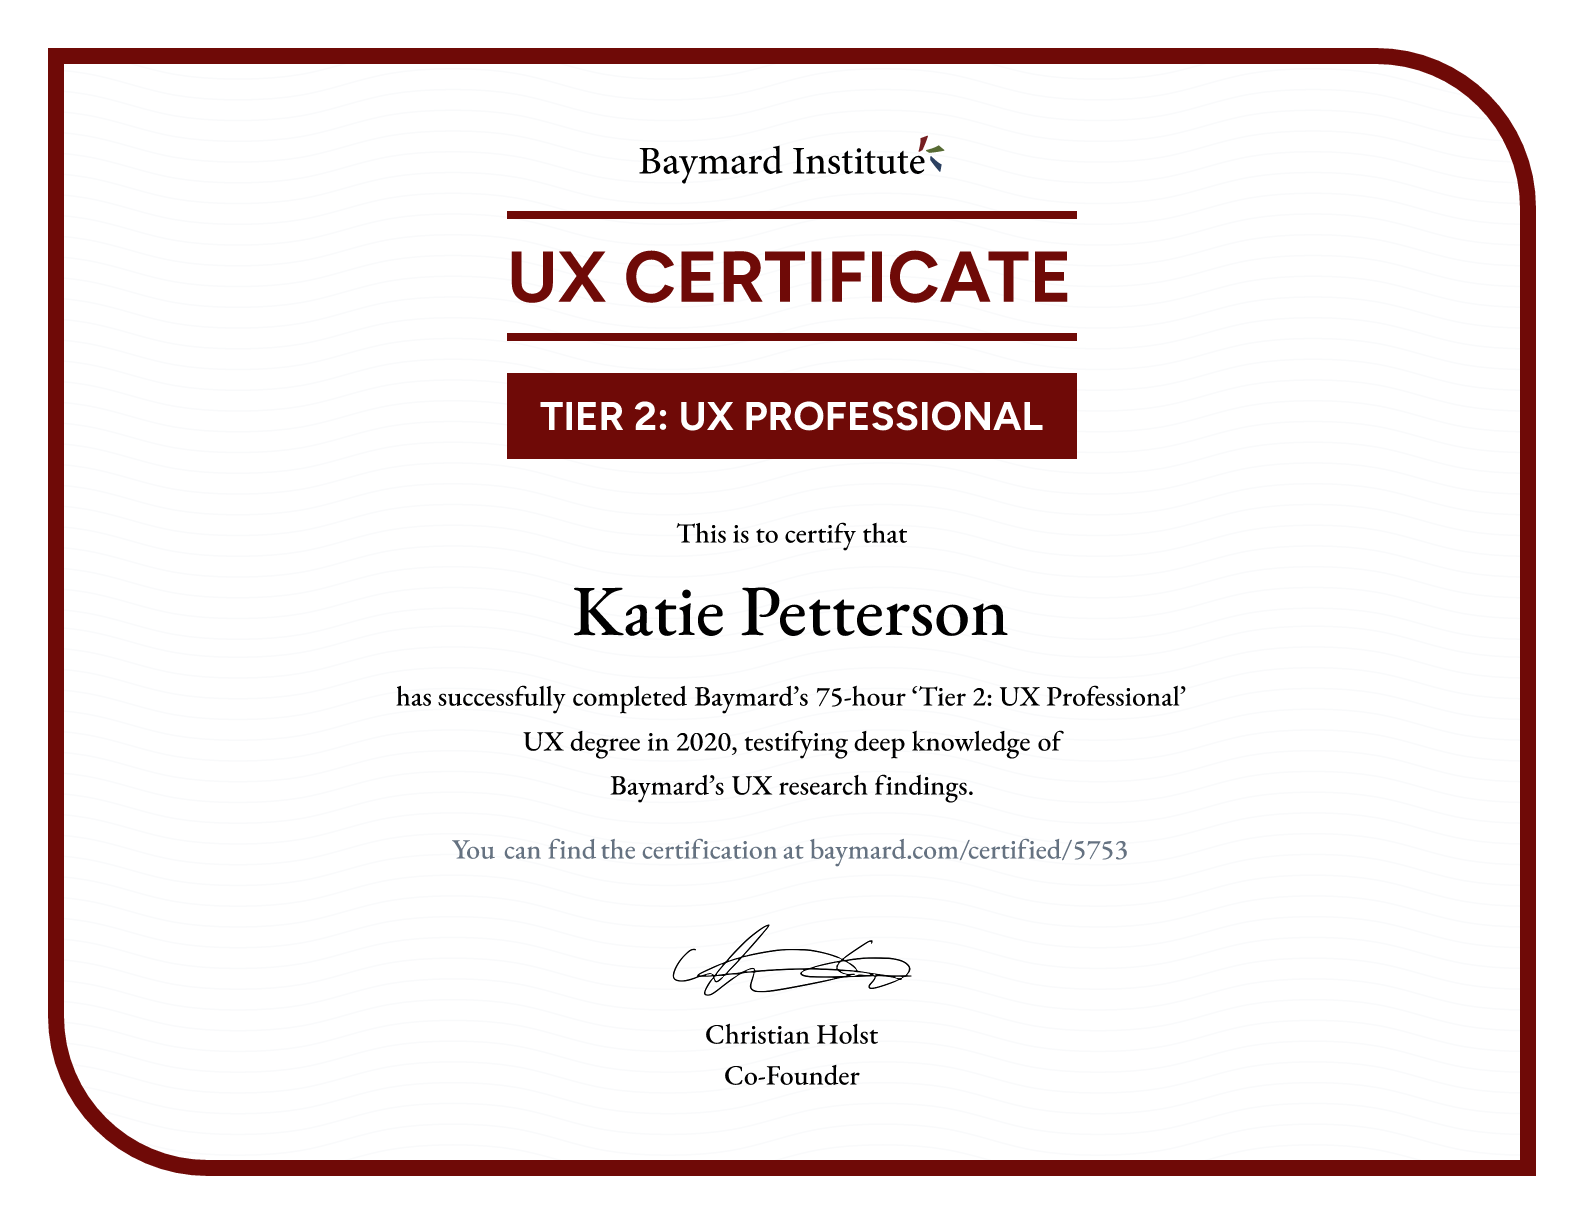 Katie Petterson’s certificate